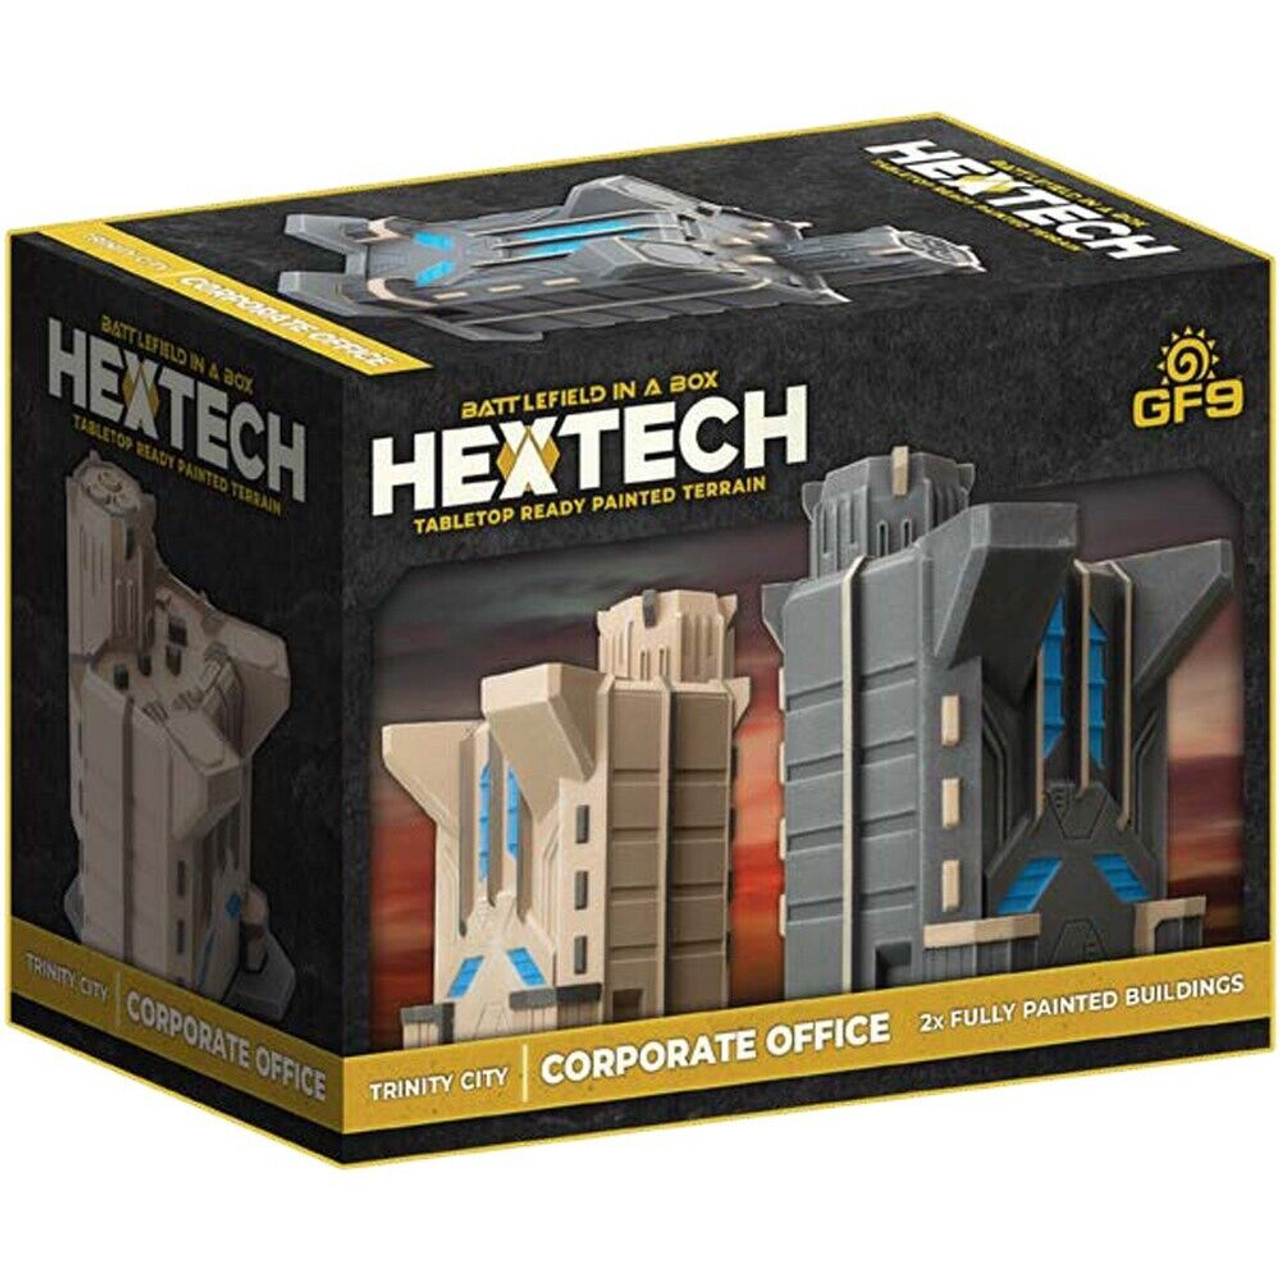 Battlefield in a Box: HexTech - Corporate Office